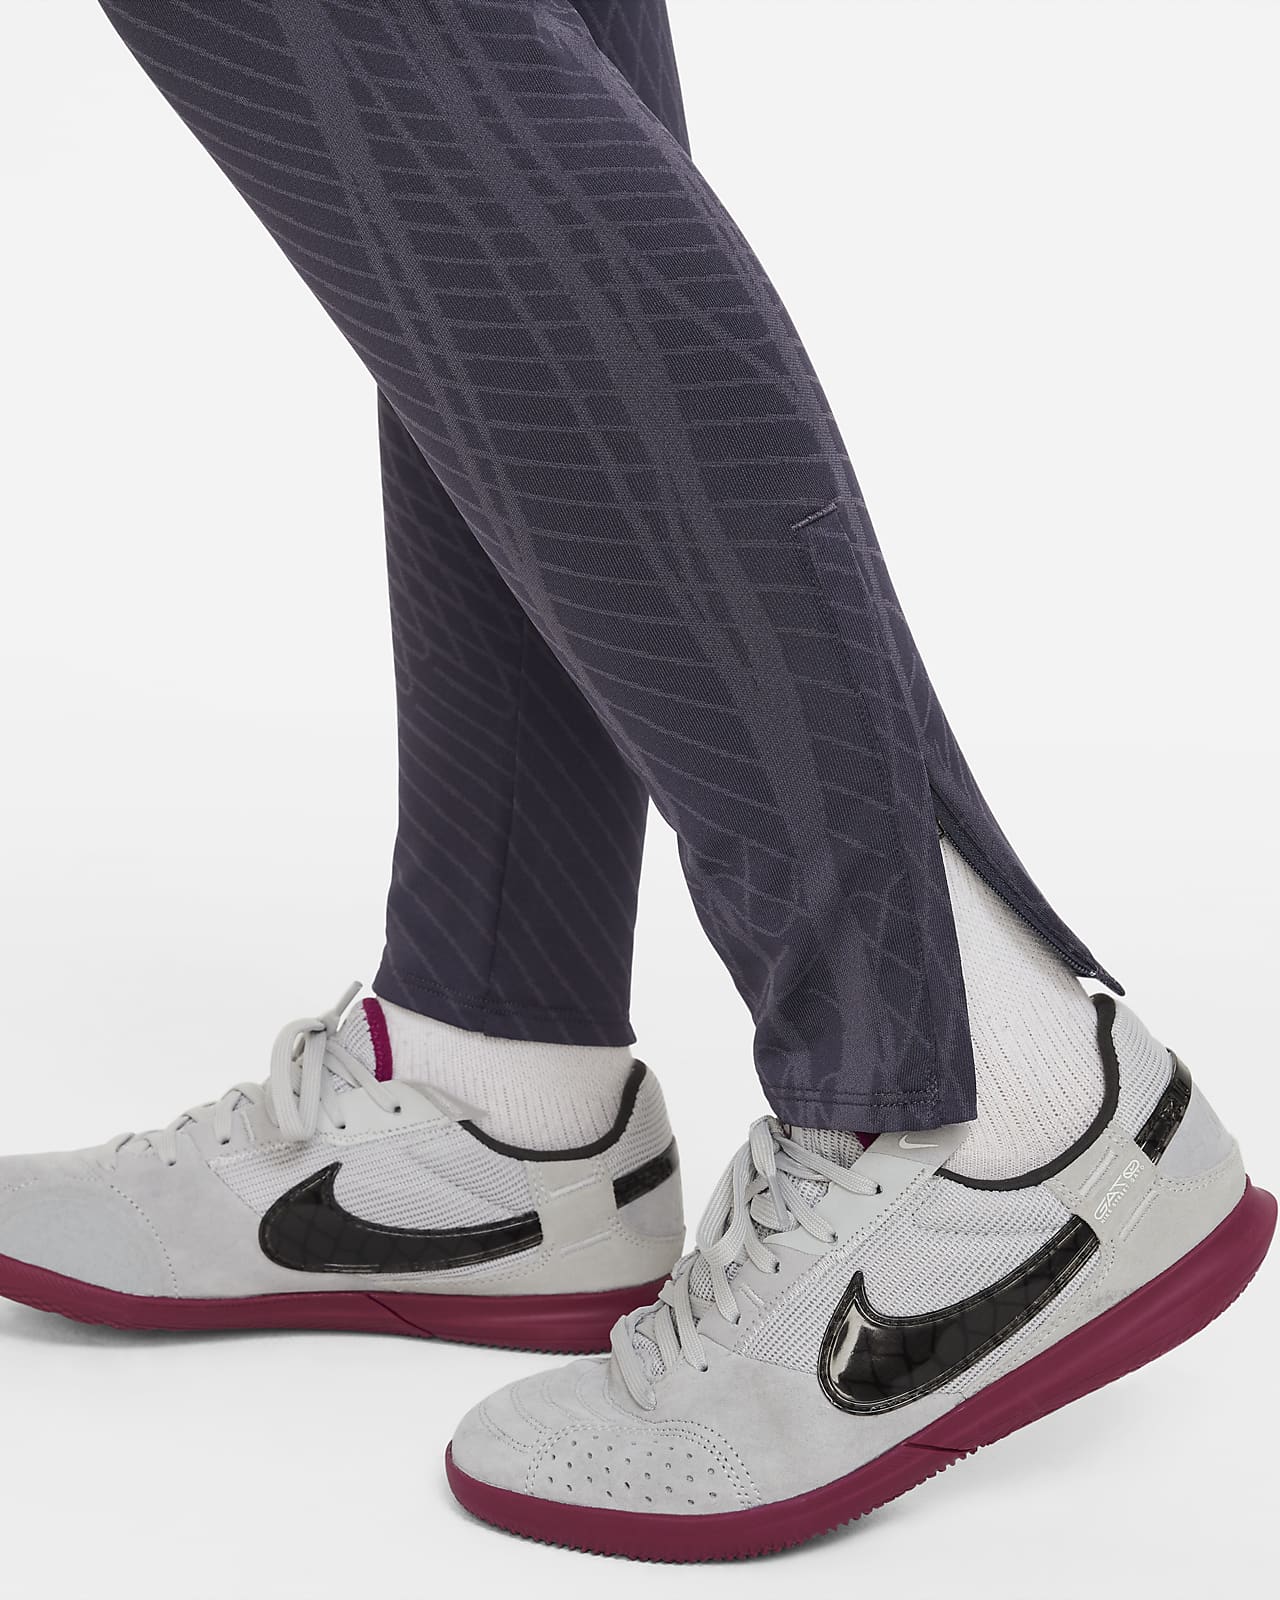 Nike Pro Hyperwarm Women’s Velour Tights